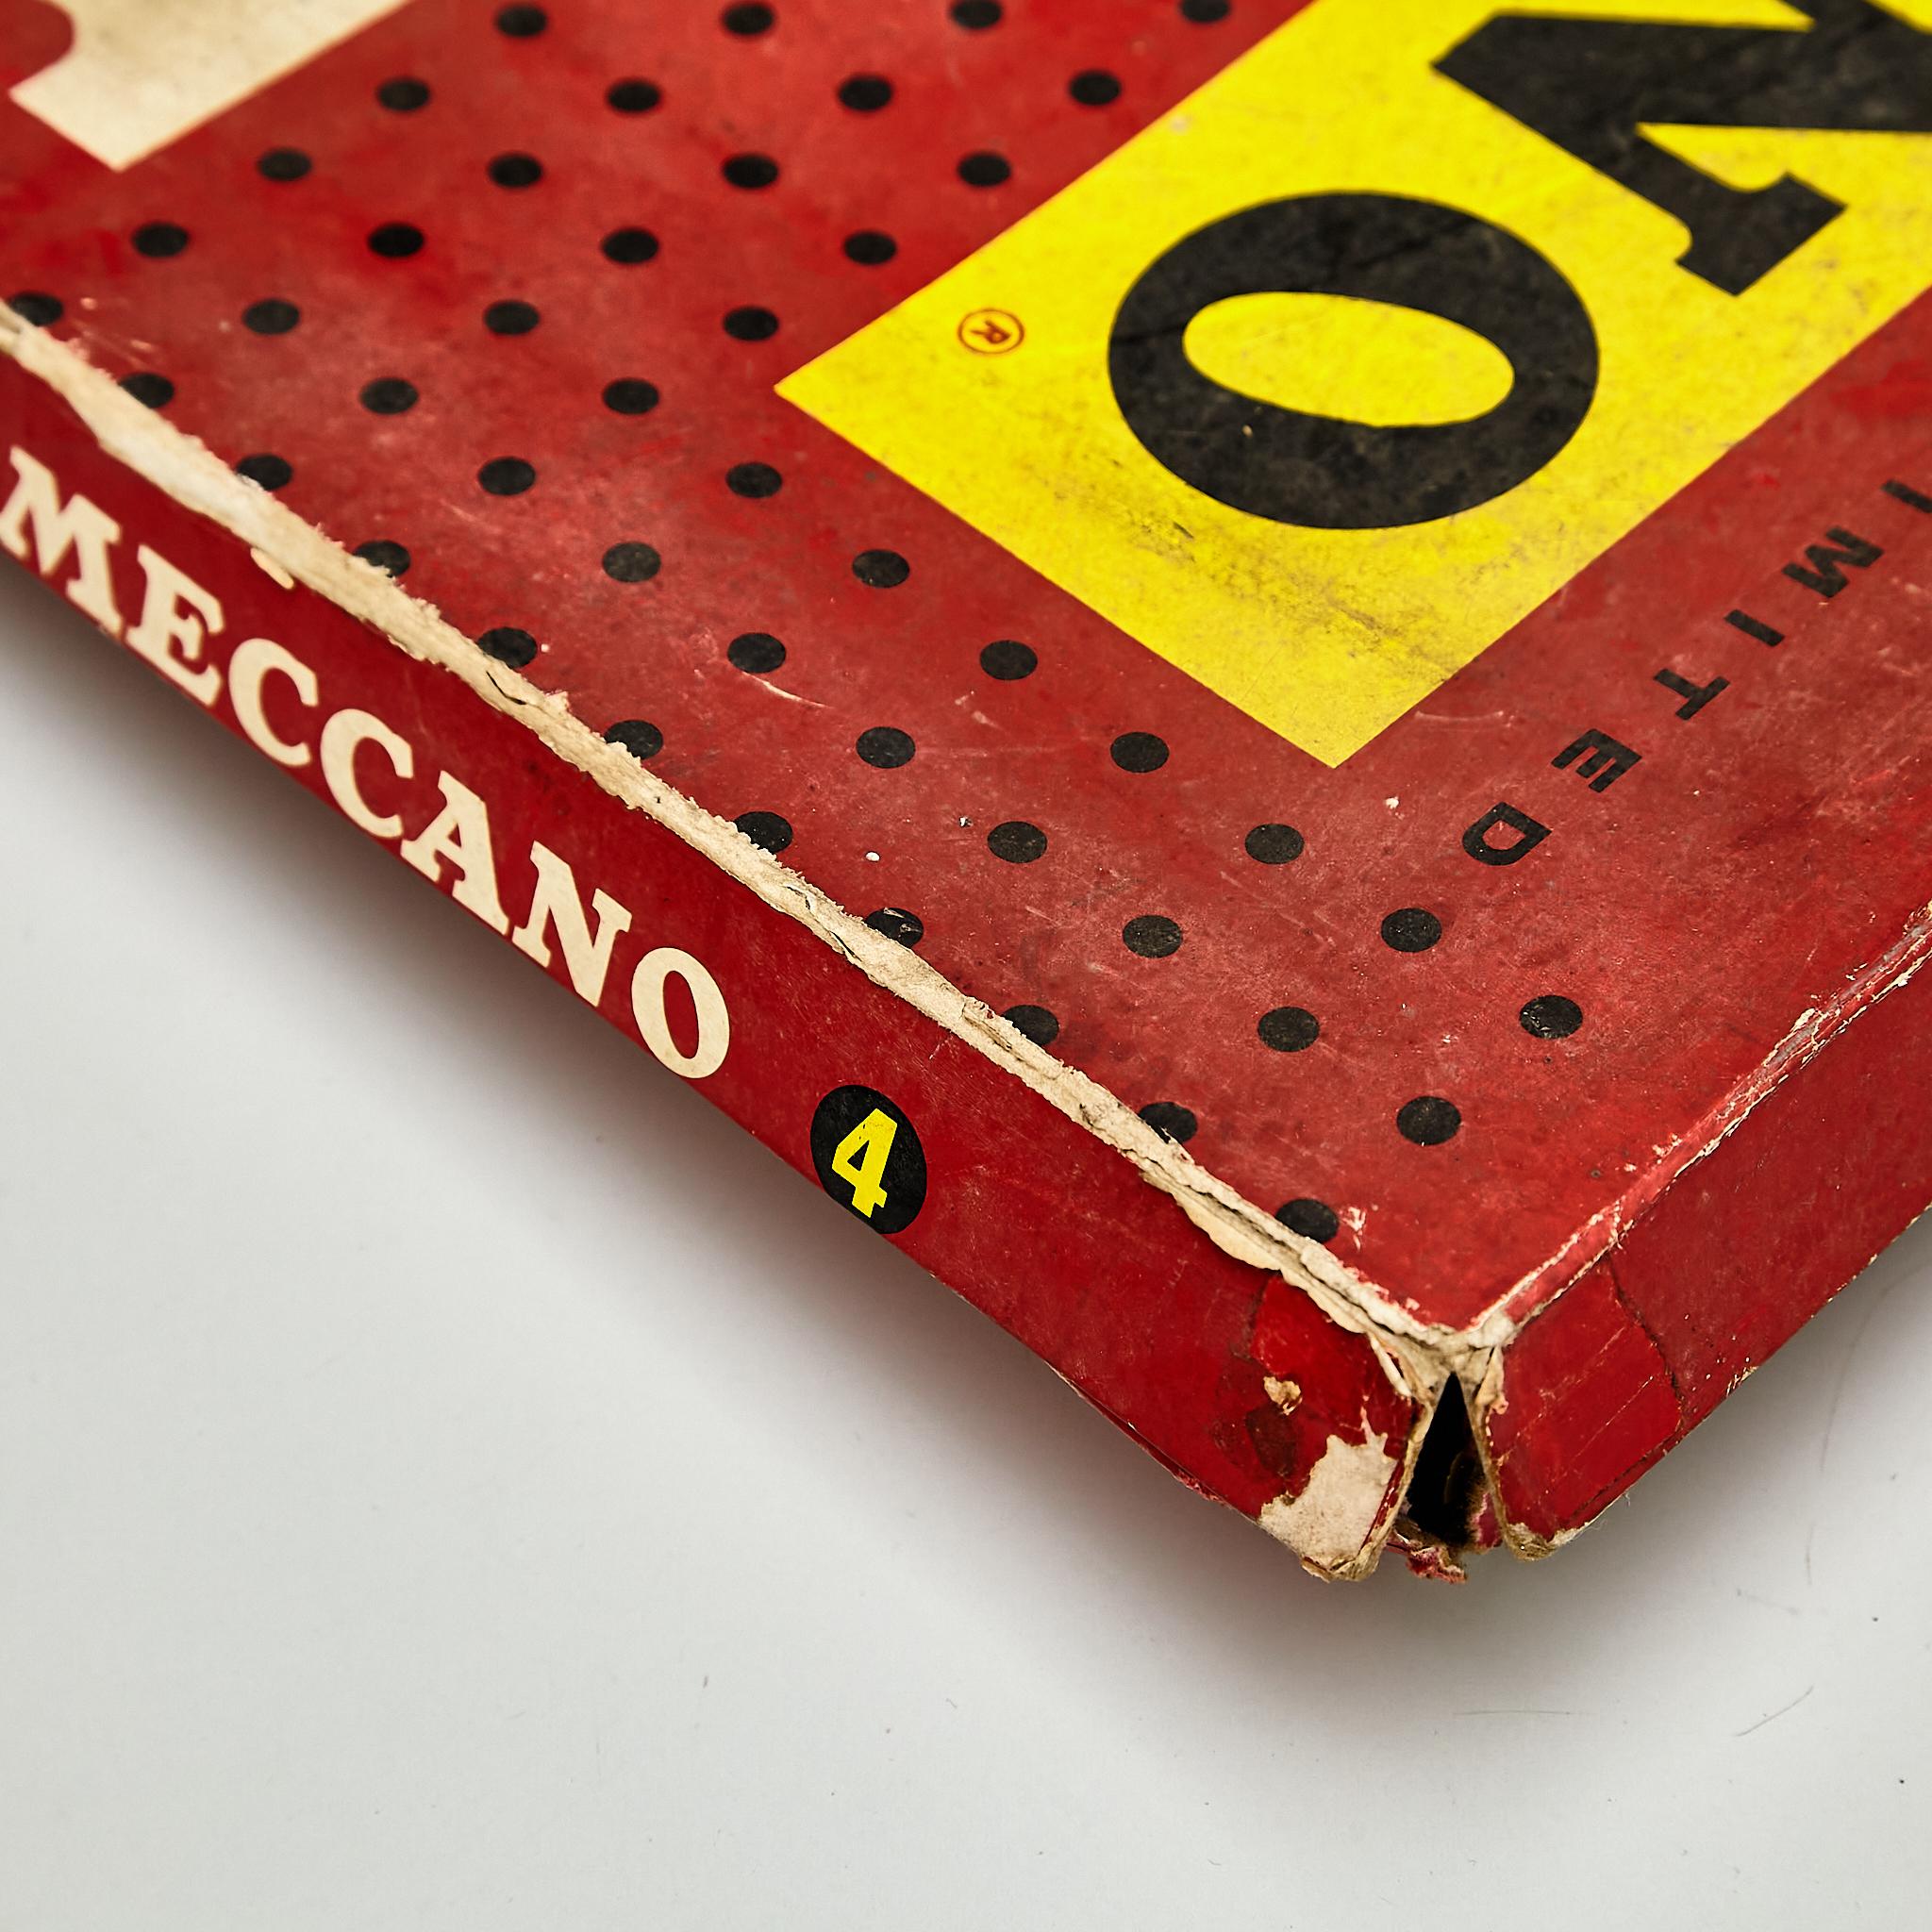 Vintage Meccano Building Game in Original Box For Sale 2